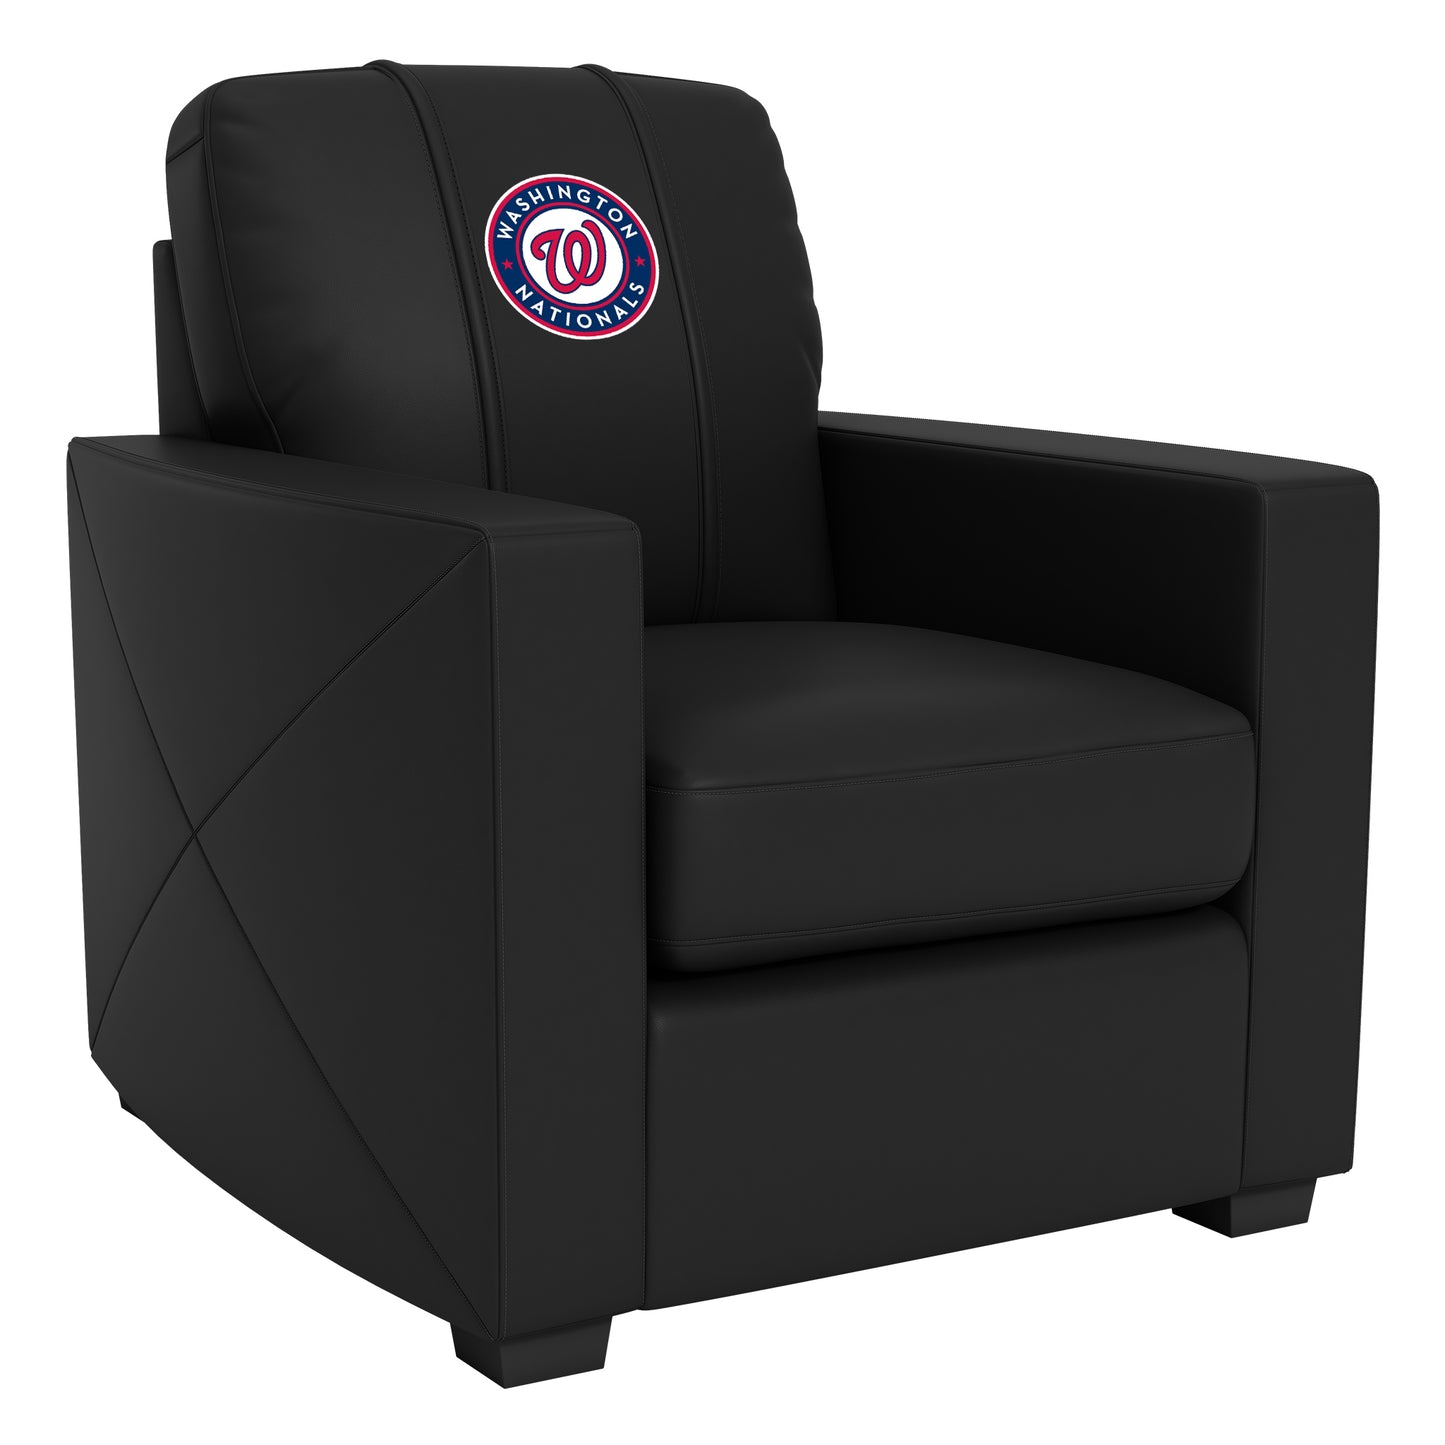 Silver Club Chair with Washington Nationals Logo